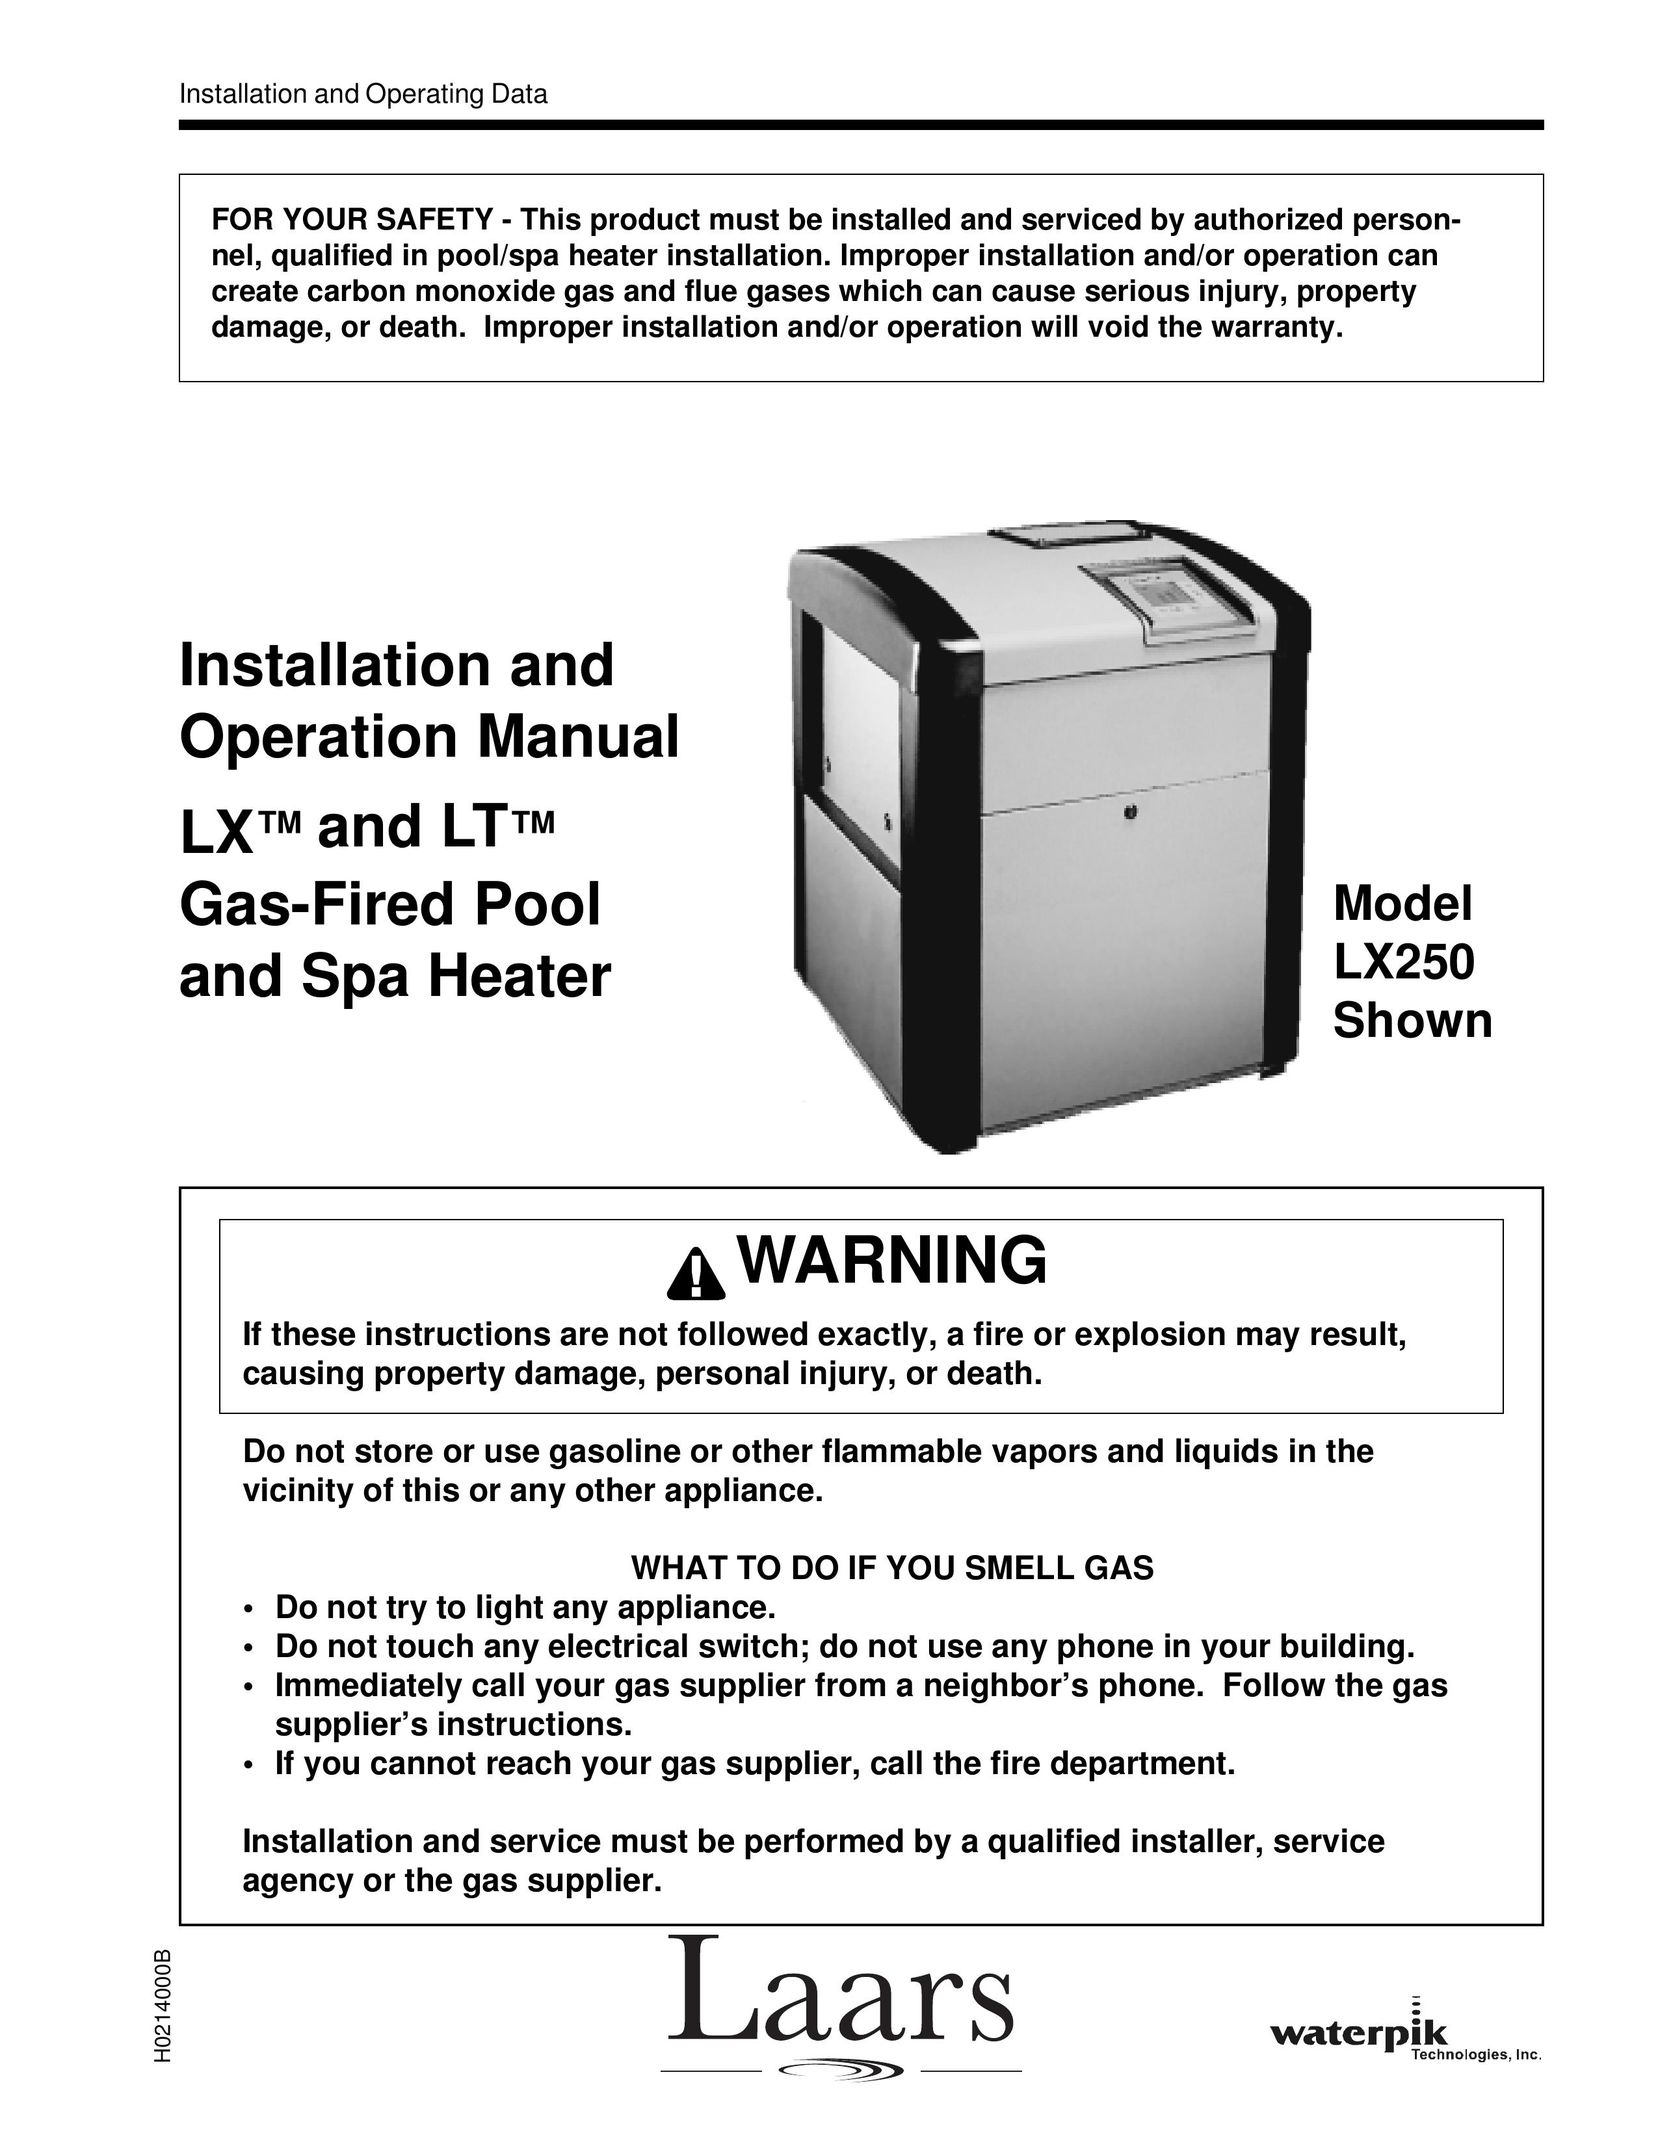 Waterpik Technologies pool/spa heater Electric Heater User Manual